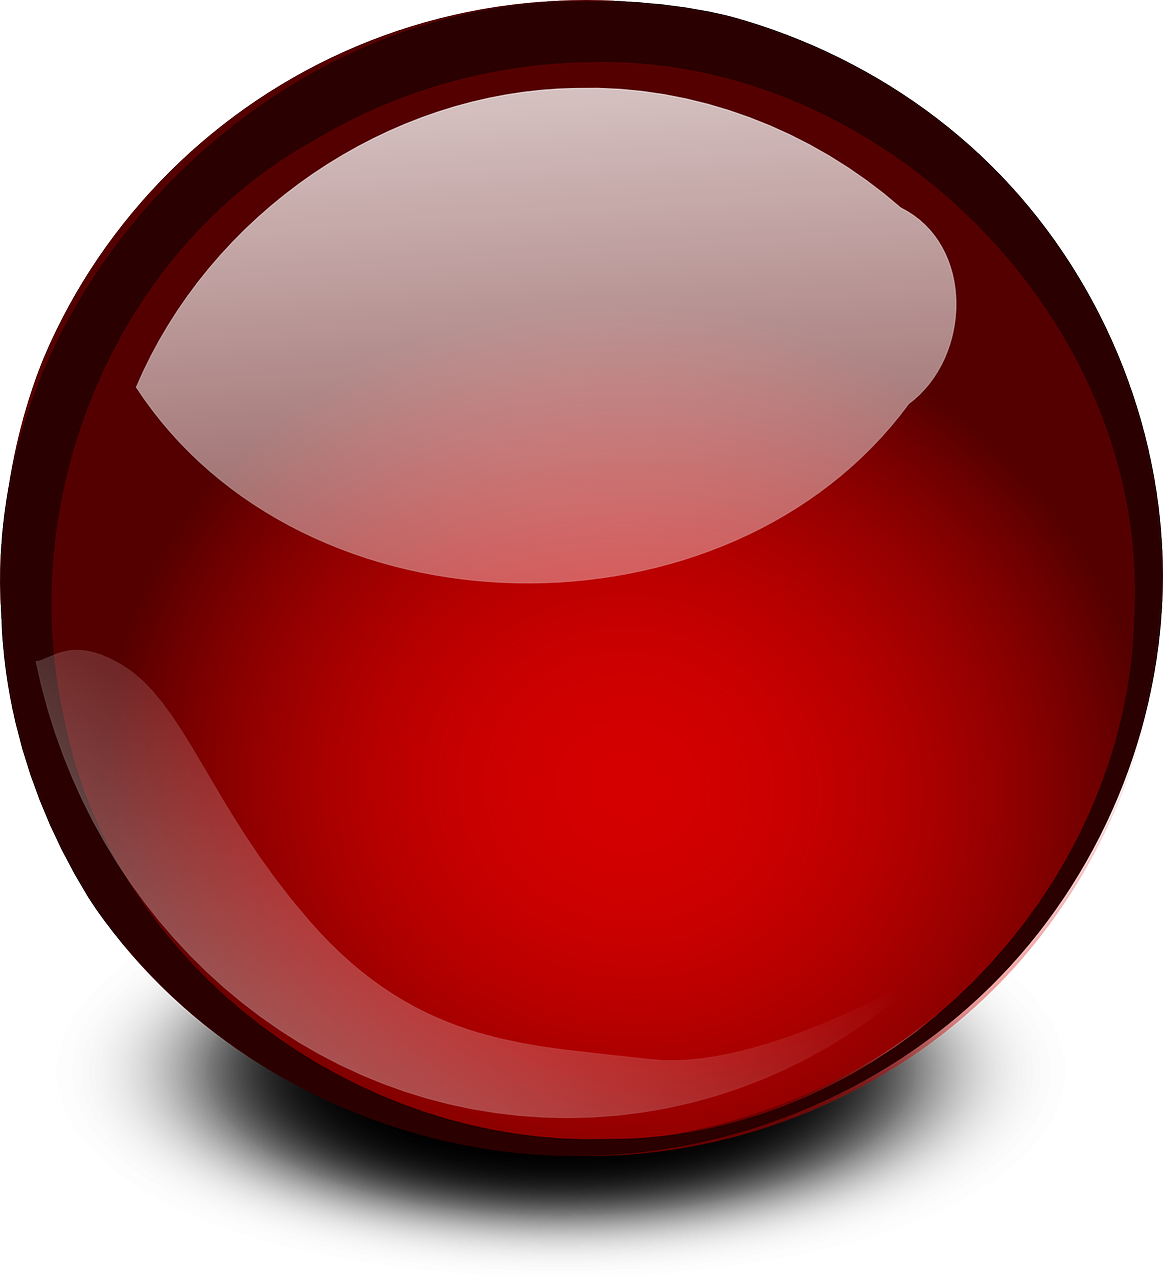 Download red balls. Красное круглое. Круглая стеклянная кнопка. Красный глянцевый шар. Объемный круг.